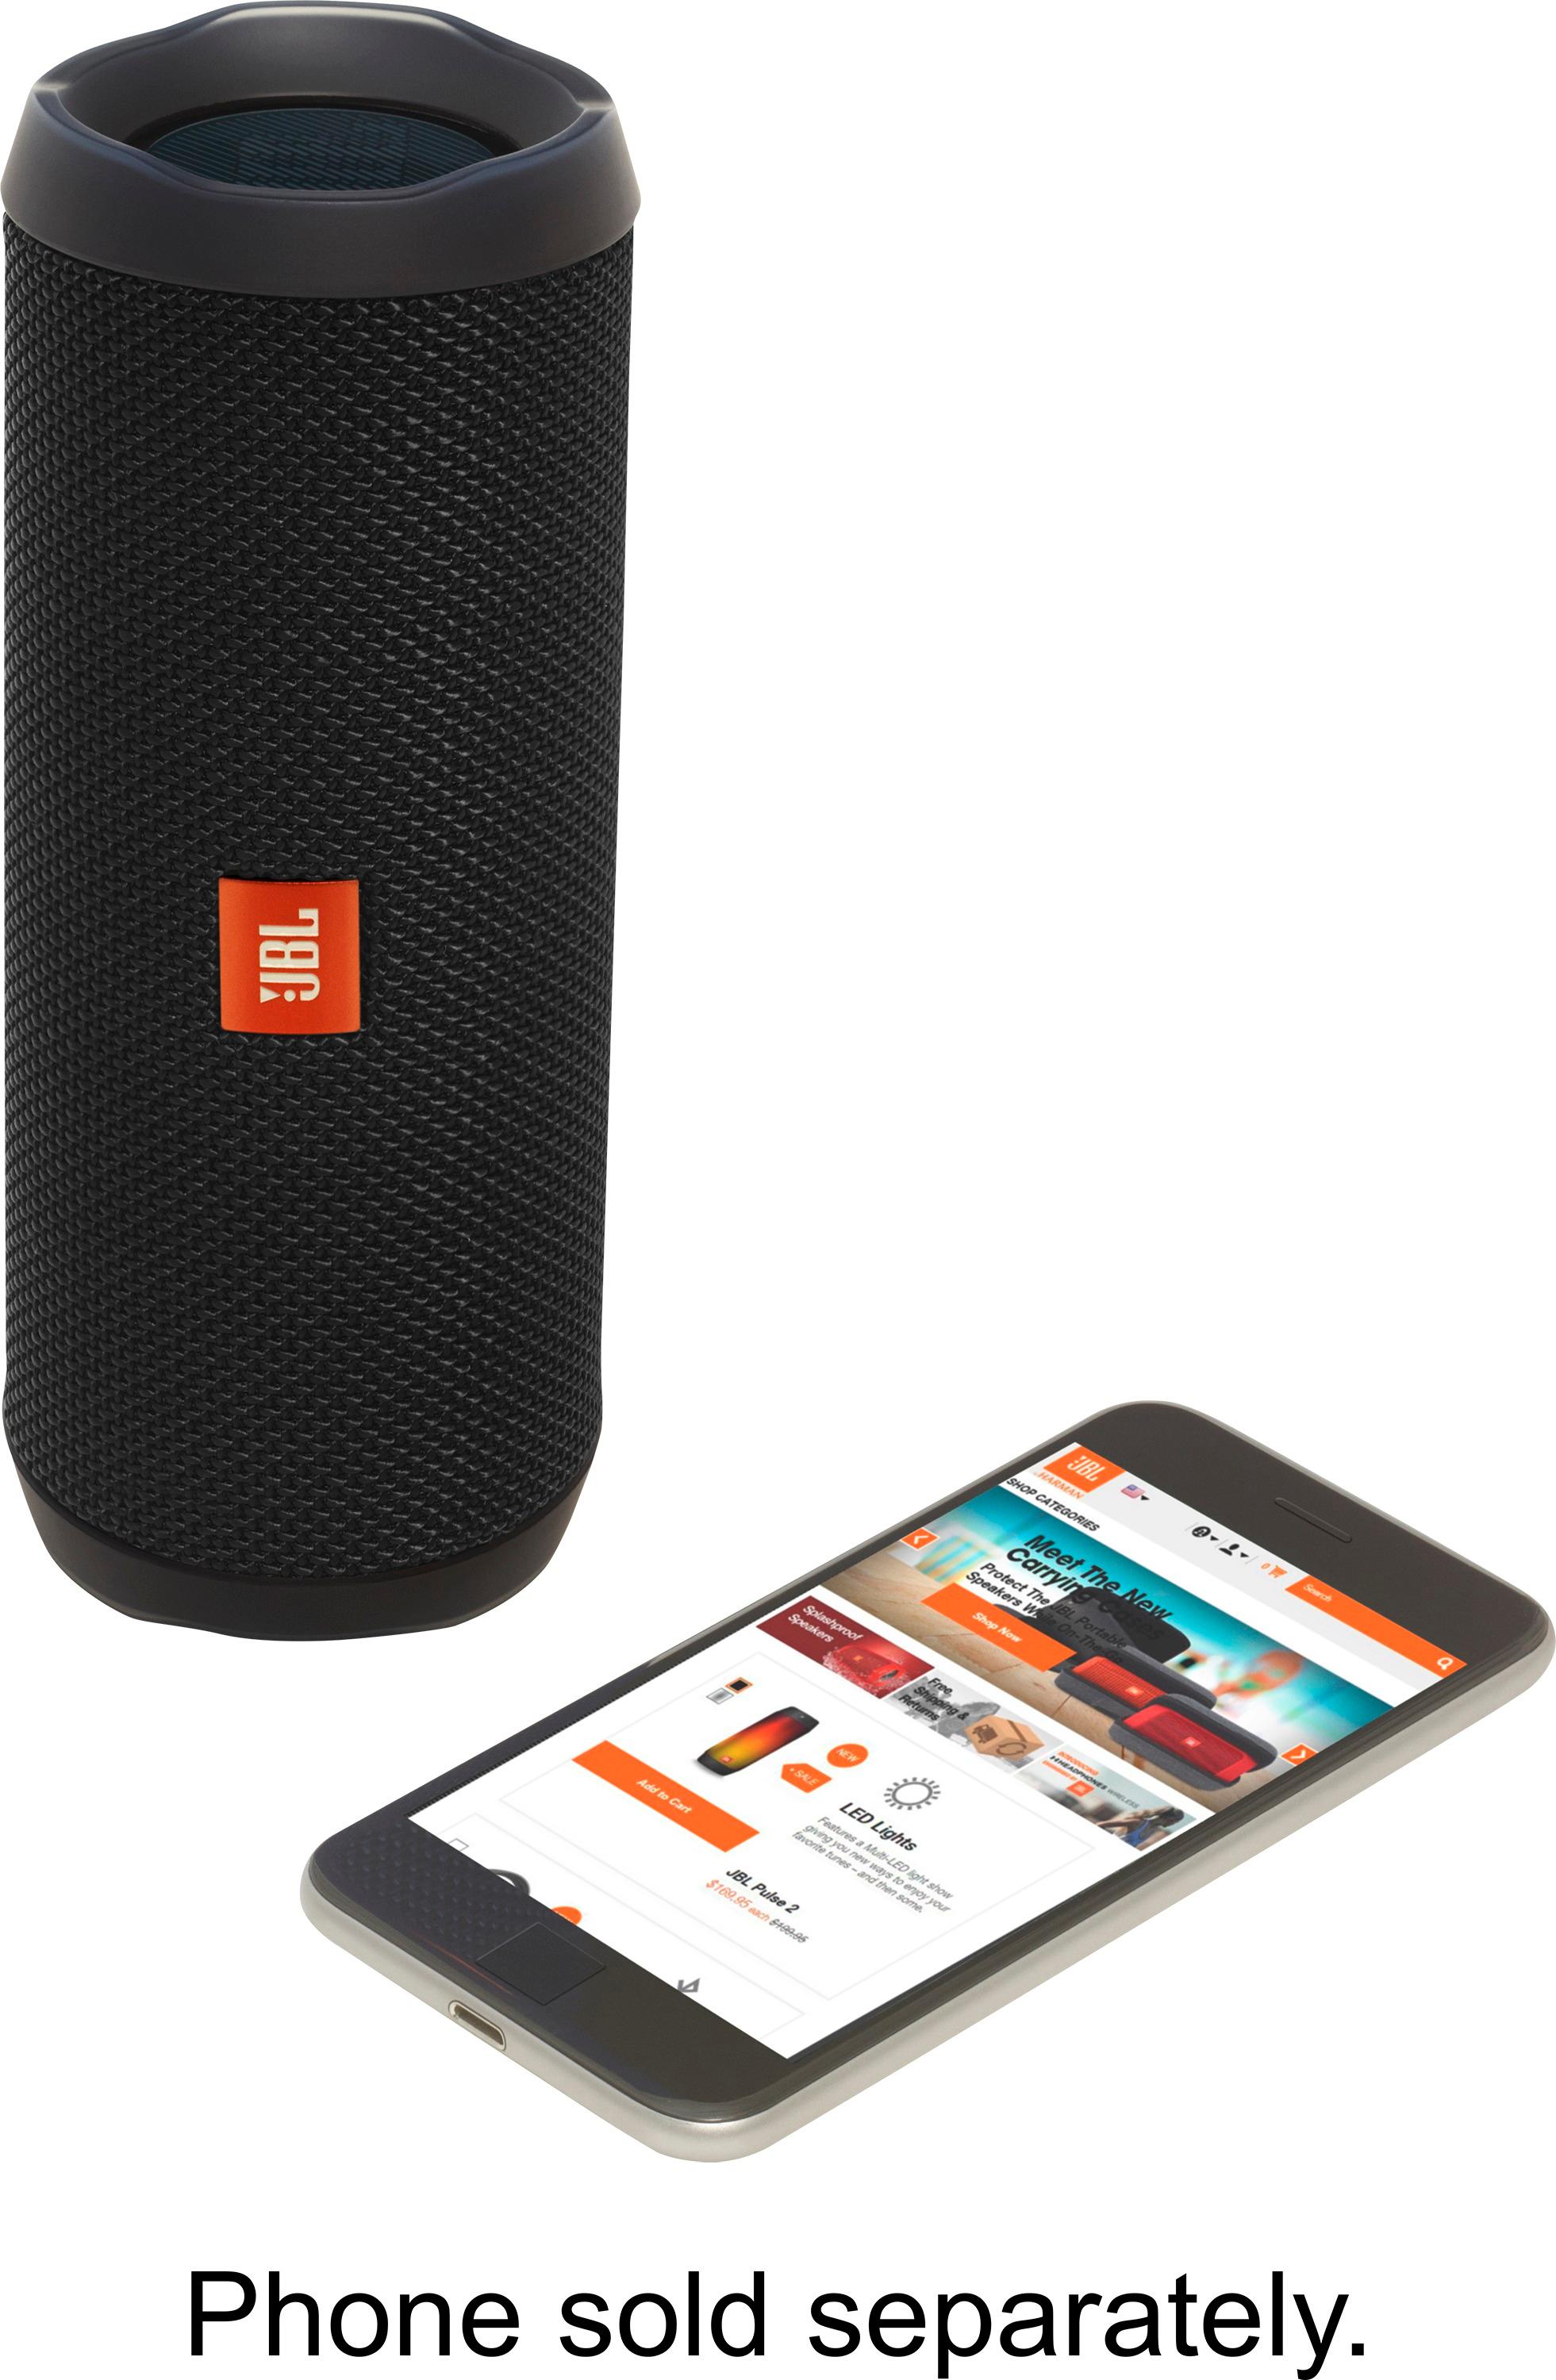 Best Buy: JBL Flip 4 Portable Bluetooth Speaker Black JBLFLIP4BLKAM